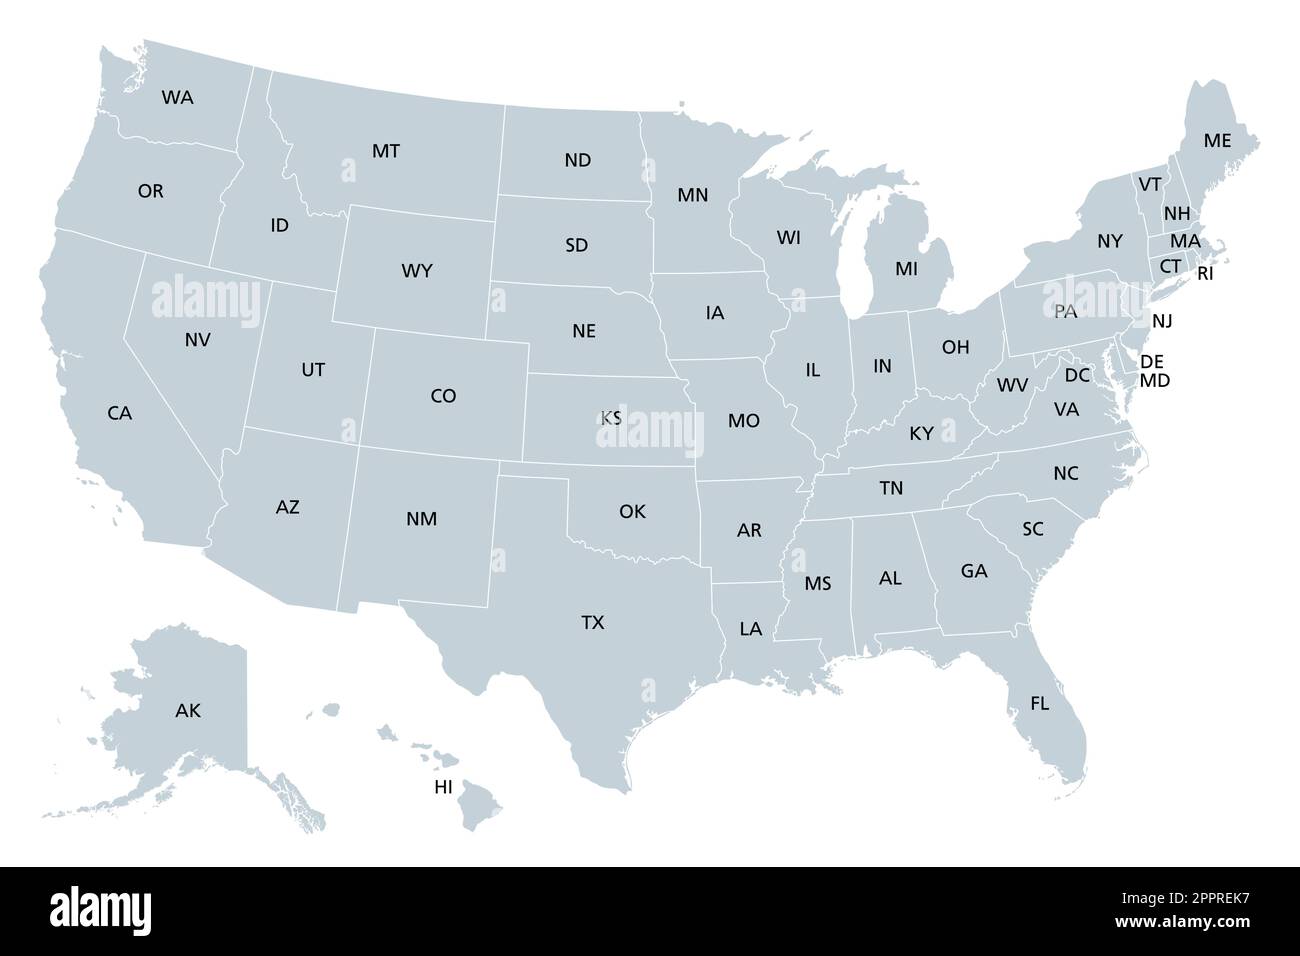 USA 50 States Map. Город Баффало США на карте. Single state